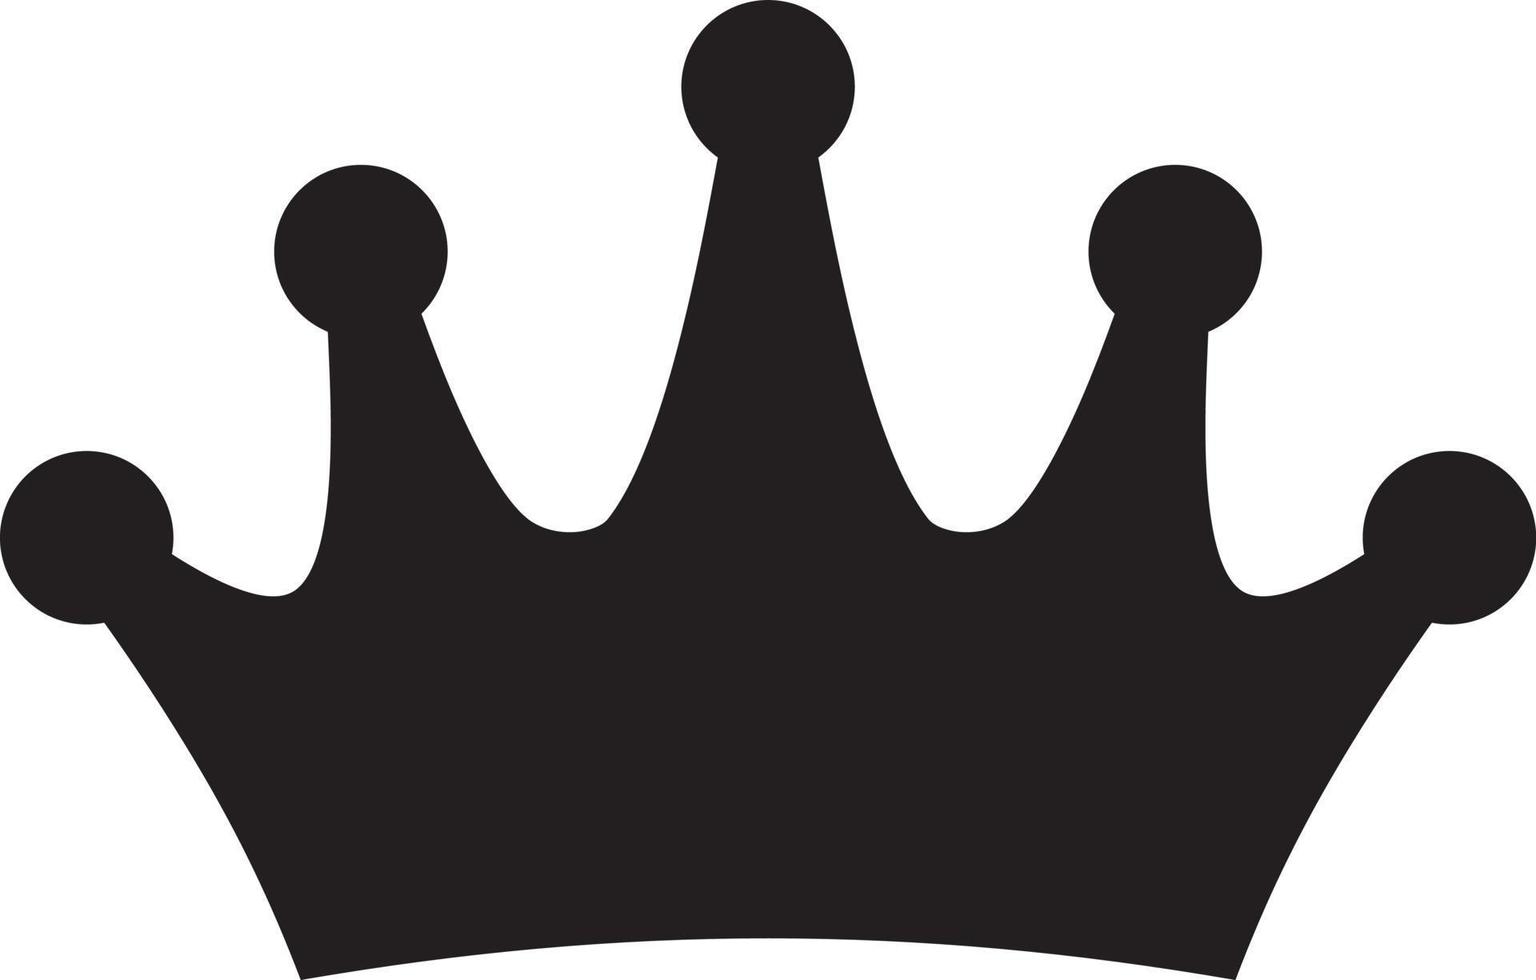 Tiara crown silhouette vector